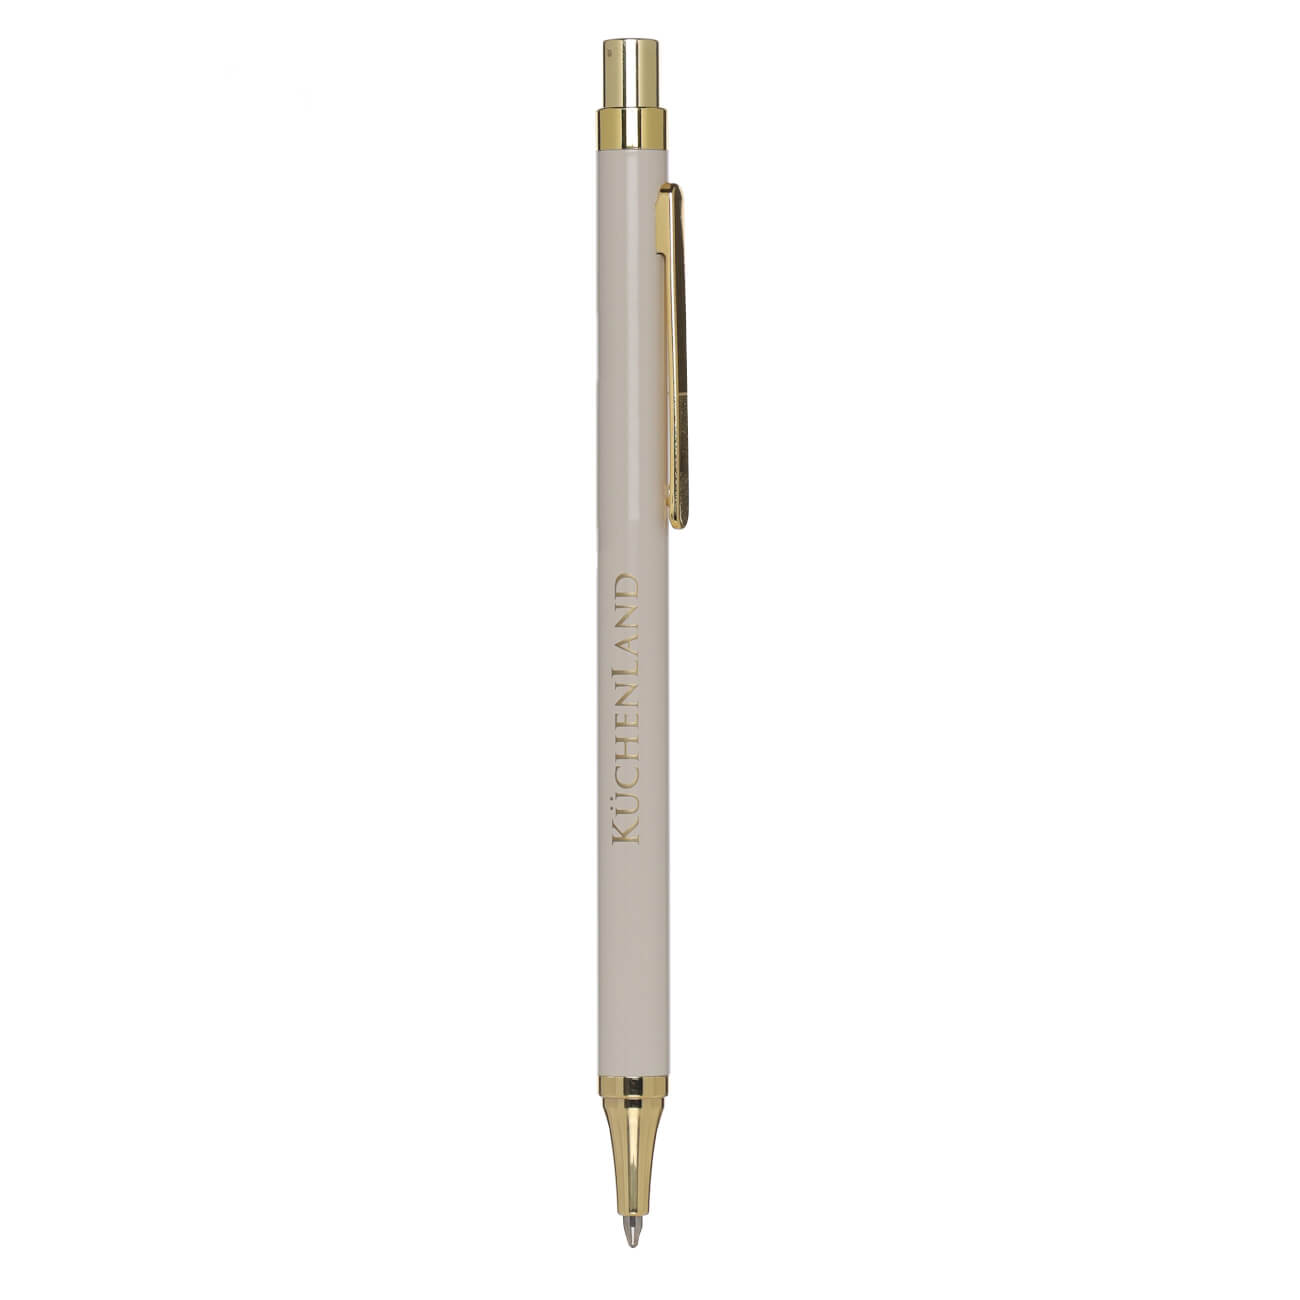 Ручка шариковая, 14 см, металл/пластик, бежевая, Eclipse dueto gun ручка стилус